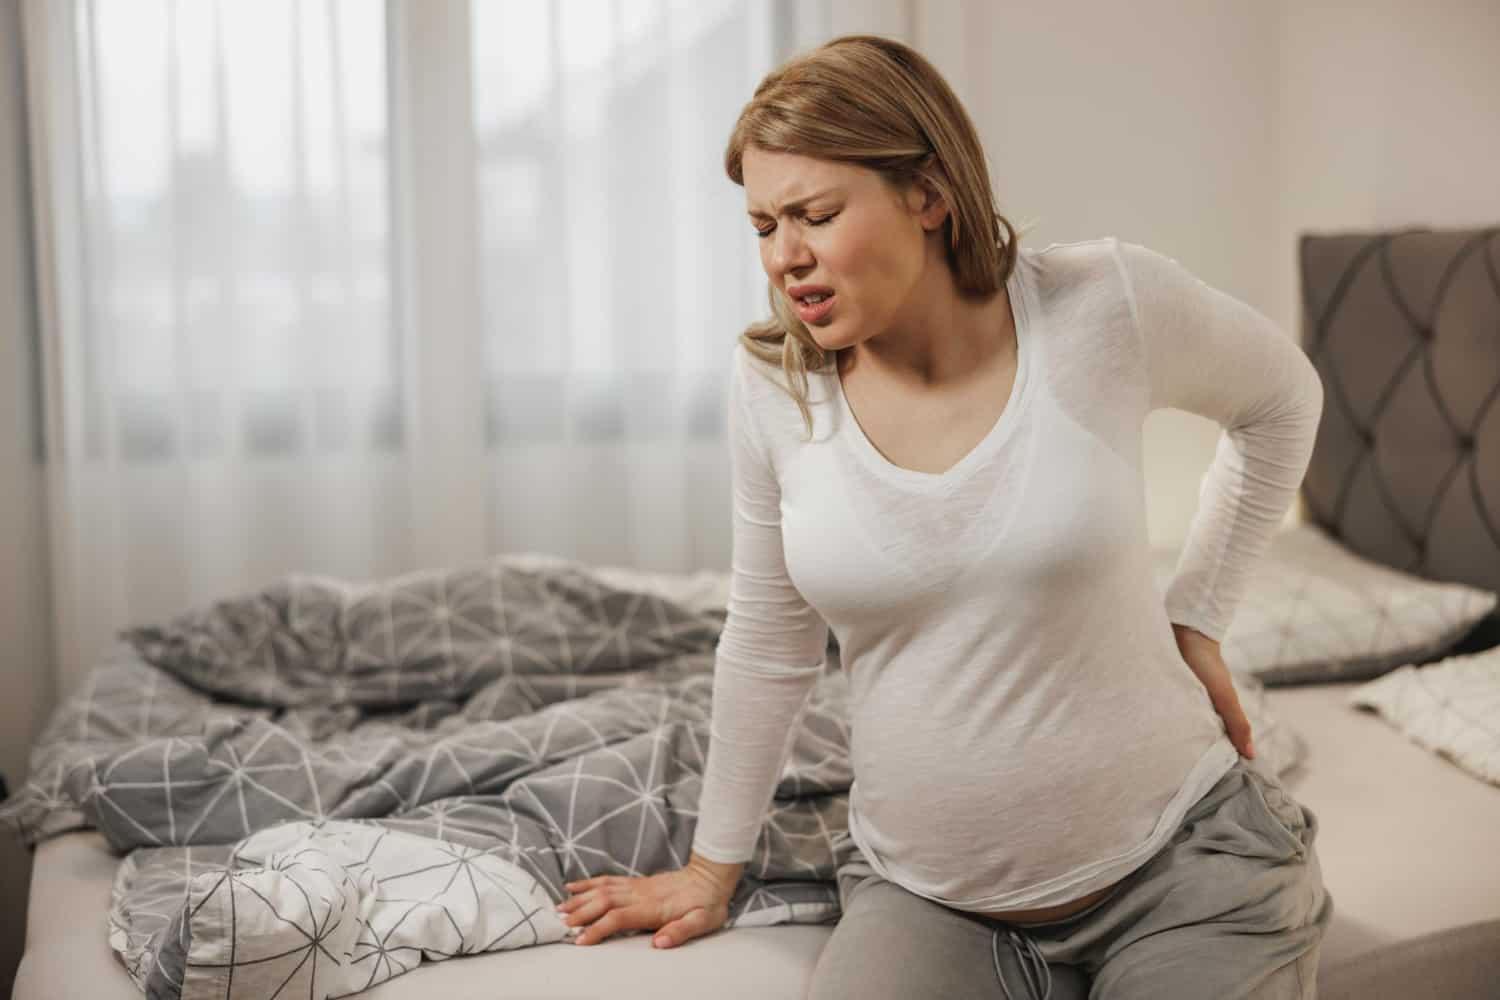 Pain Management During Pregnancy